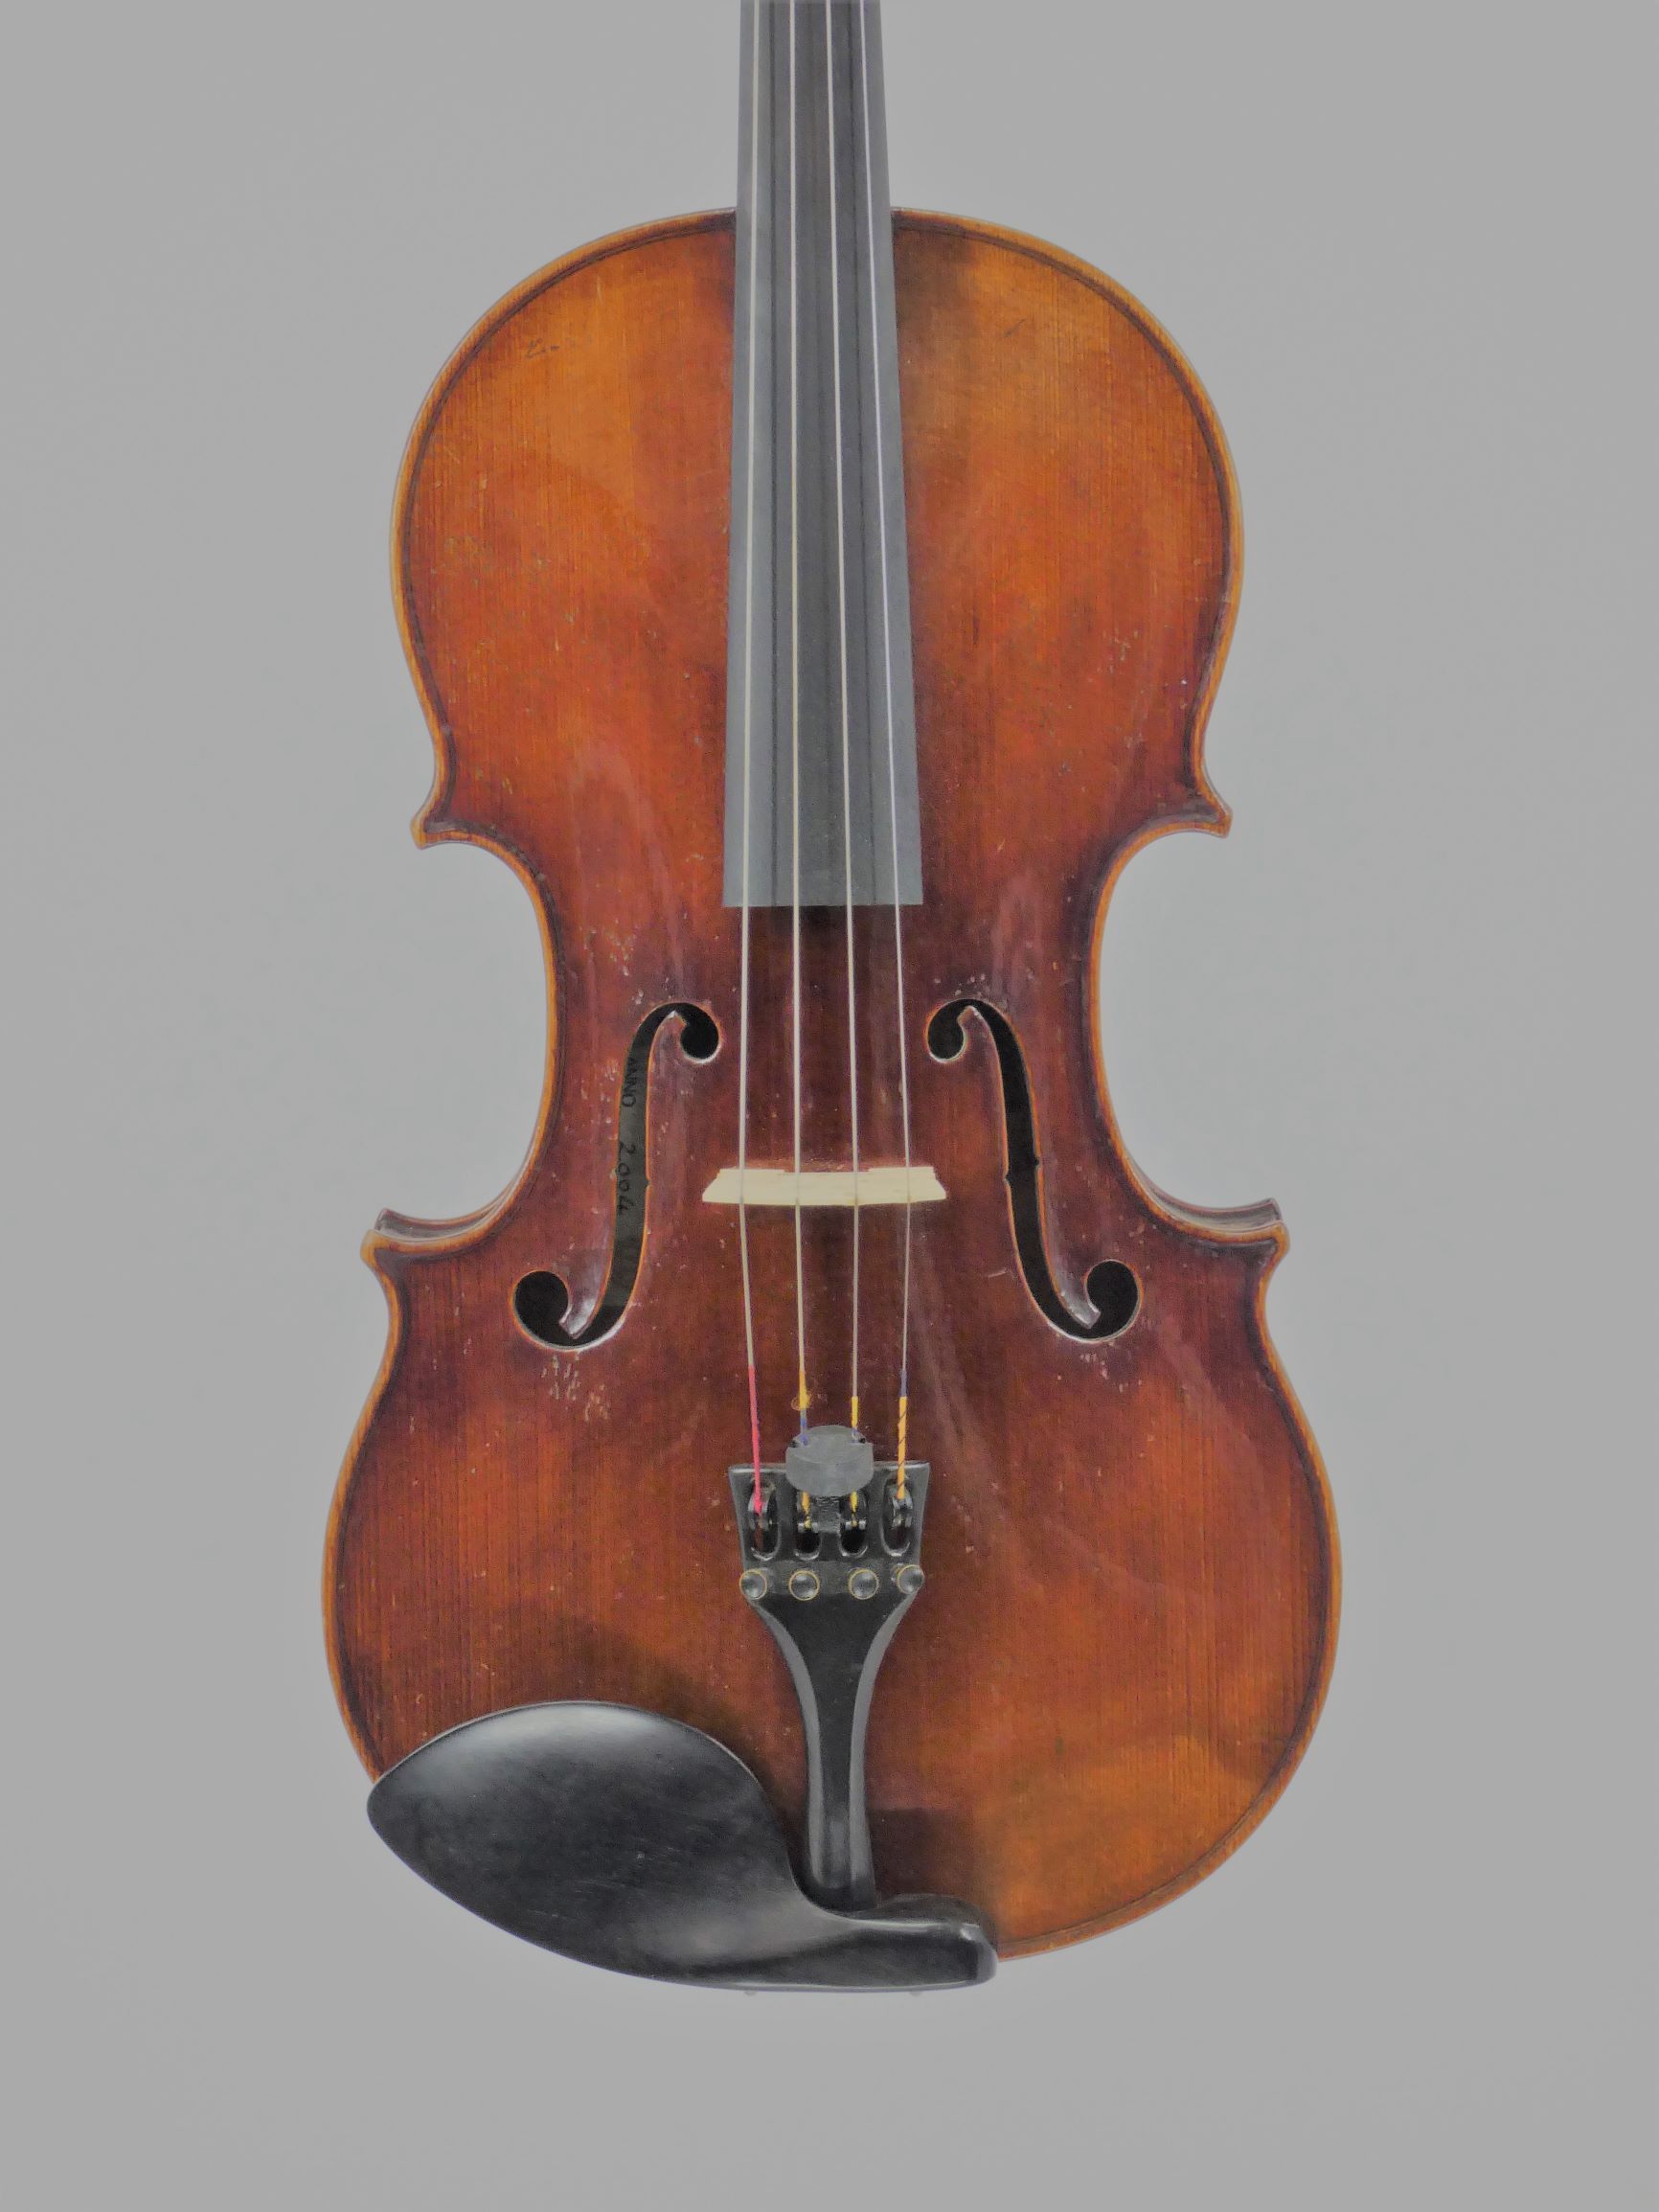 Ritz Iwata Viola 04 Amsterdam Ex Nobuko Imai 3 850 000 Fumi S Violin Shop横浜 東神奈川駅前 弦楽器販売 製作 修理 調整 毛替